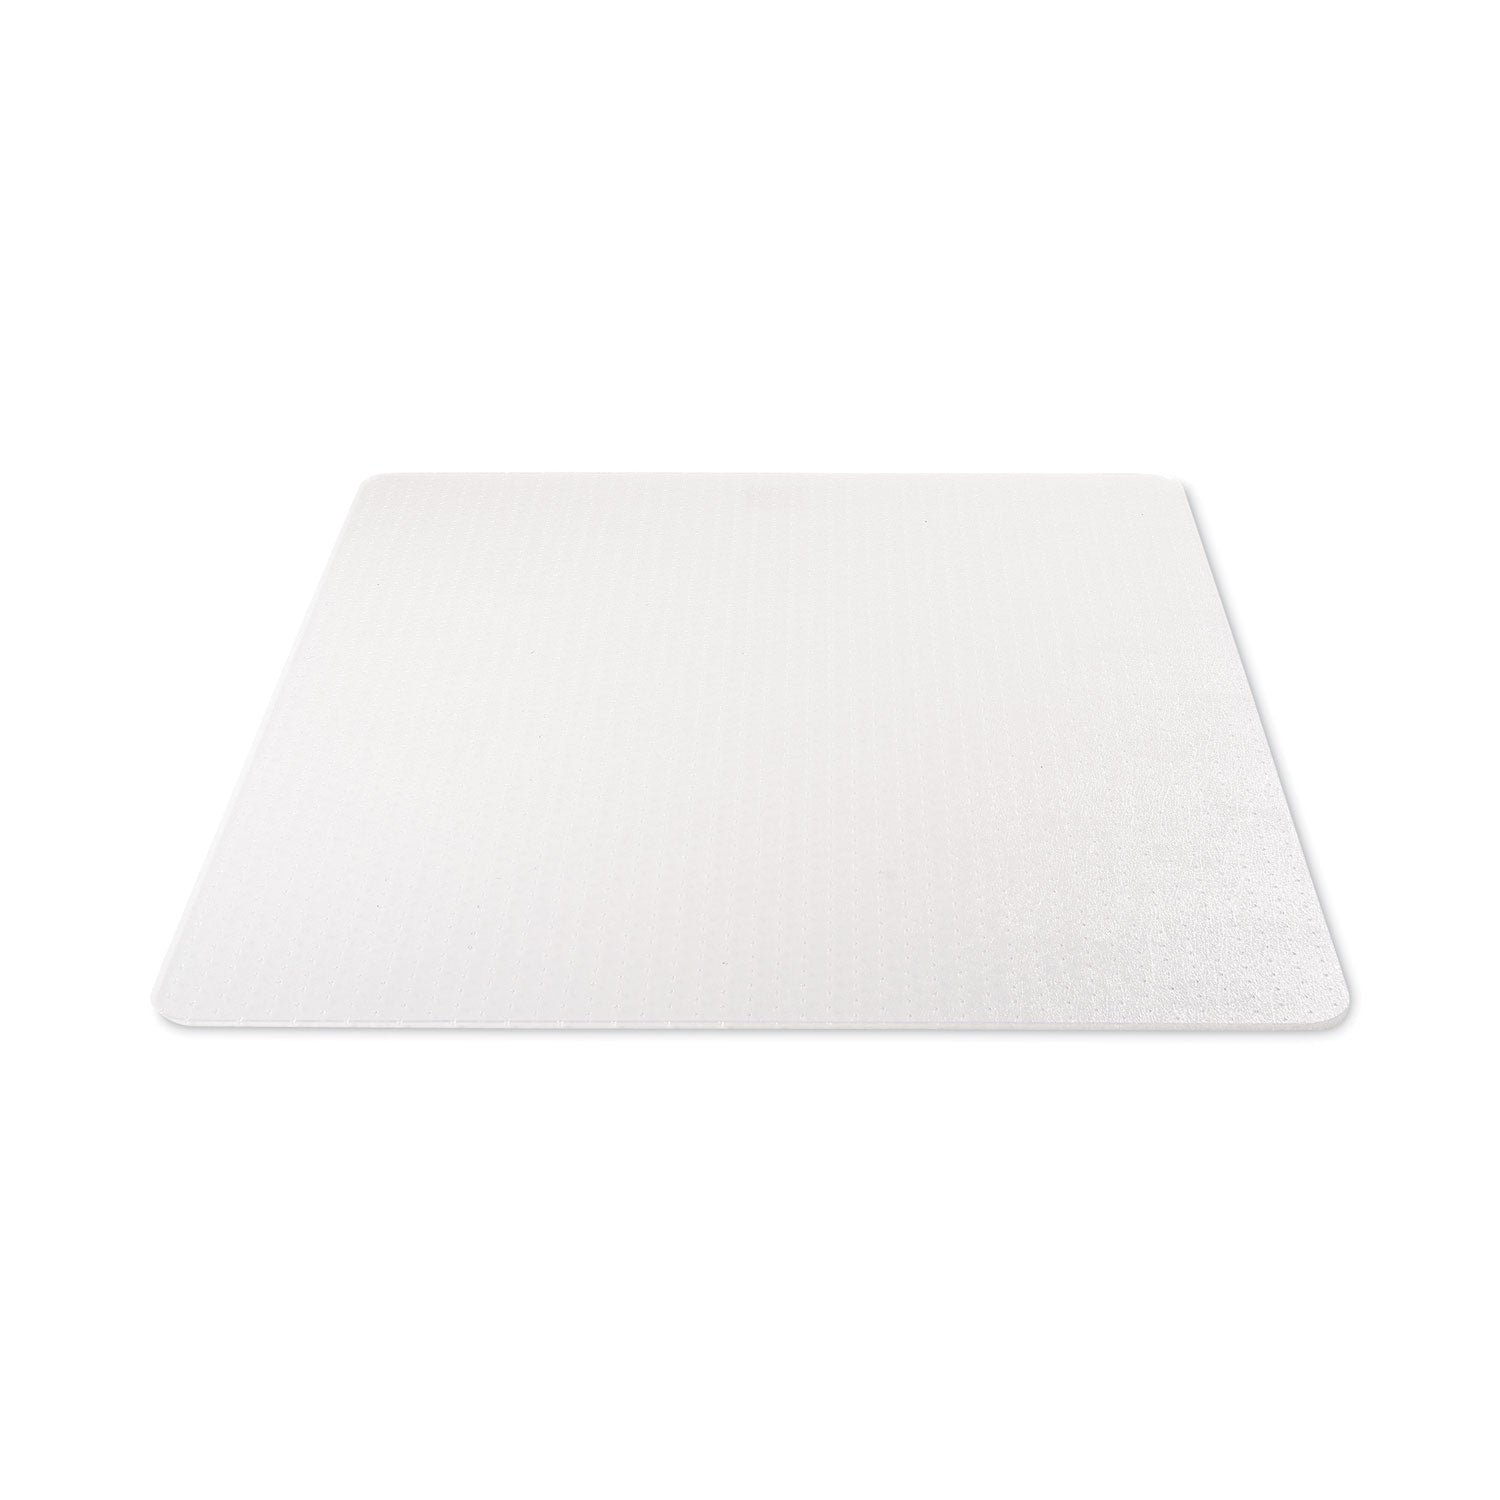 supermat-frequent-use-chair-mat-for-medium-pile-carpet-36-x-48-rectangular-clear_defcm14142 - 6